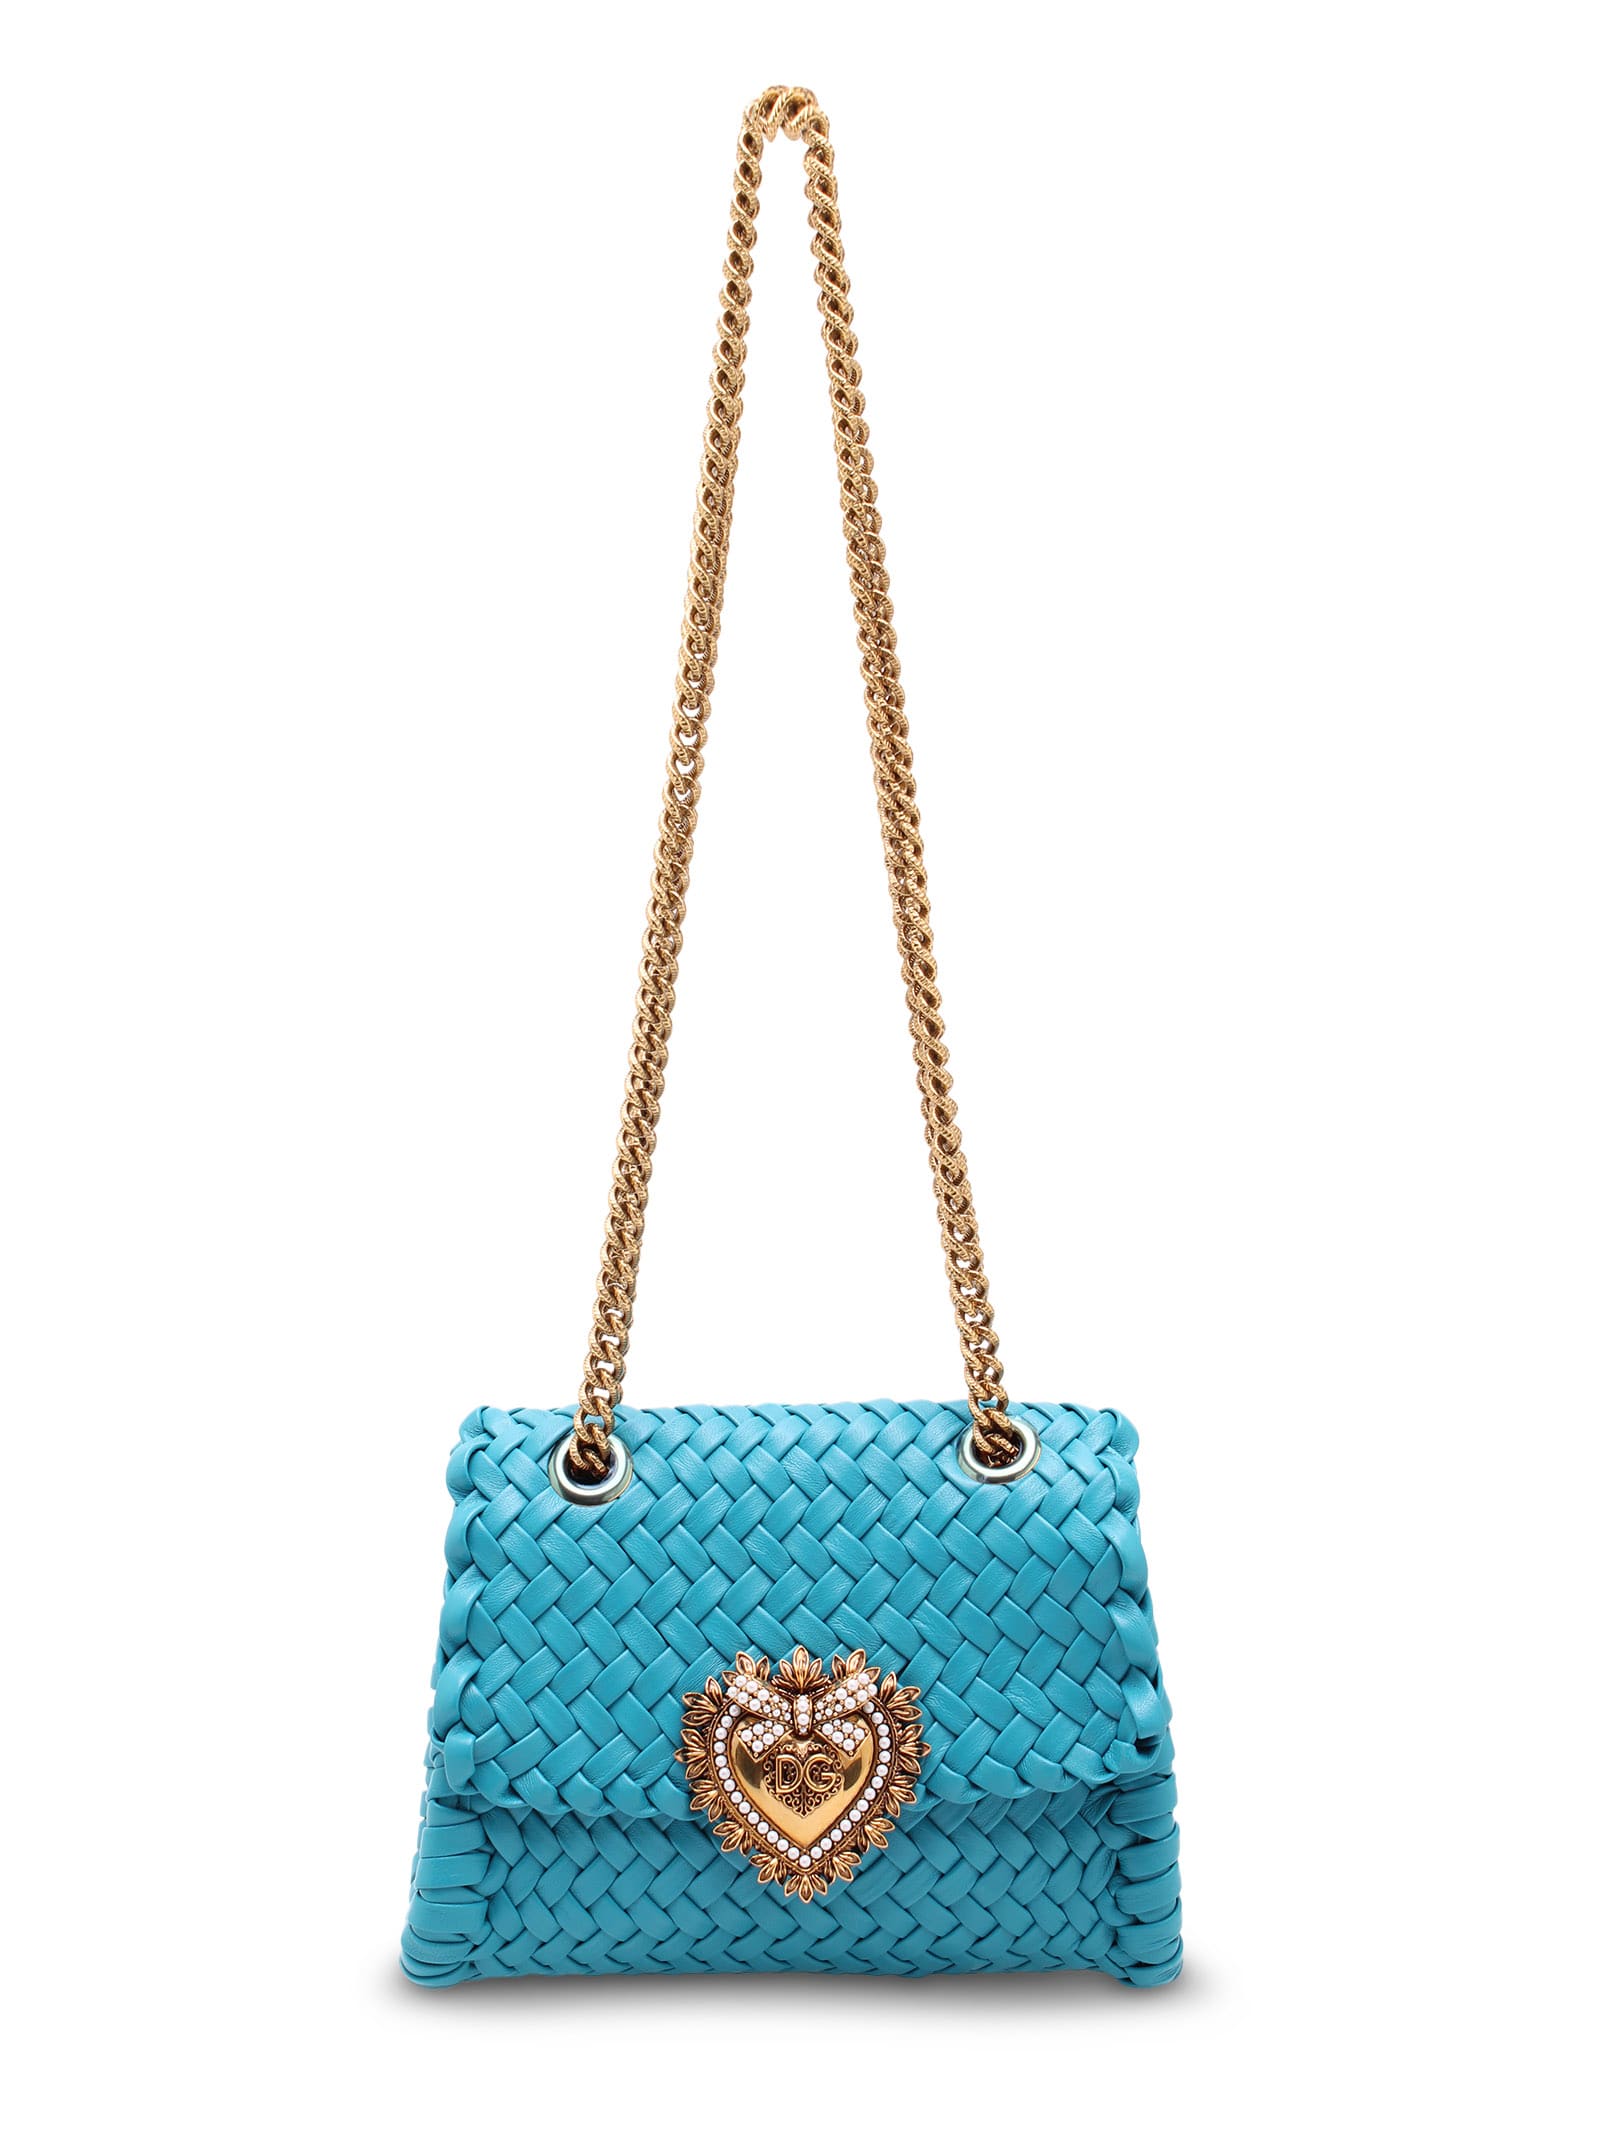 Dolce & Gabbana Devotion Leather Shoulder Bag In Turquoise